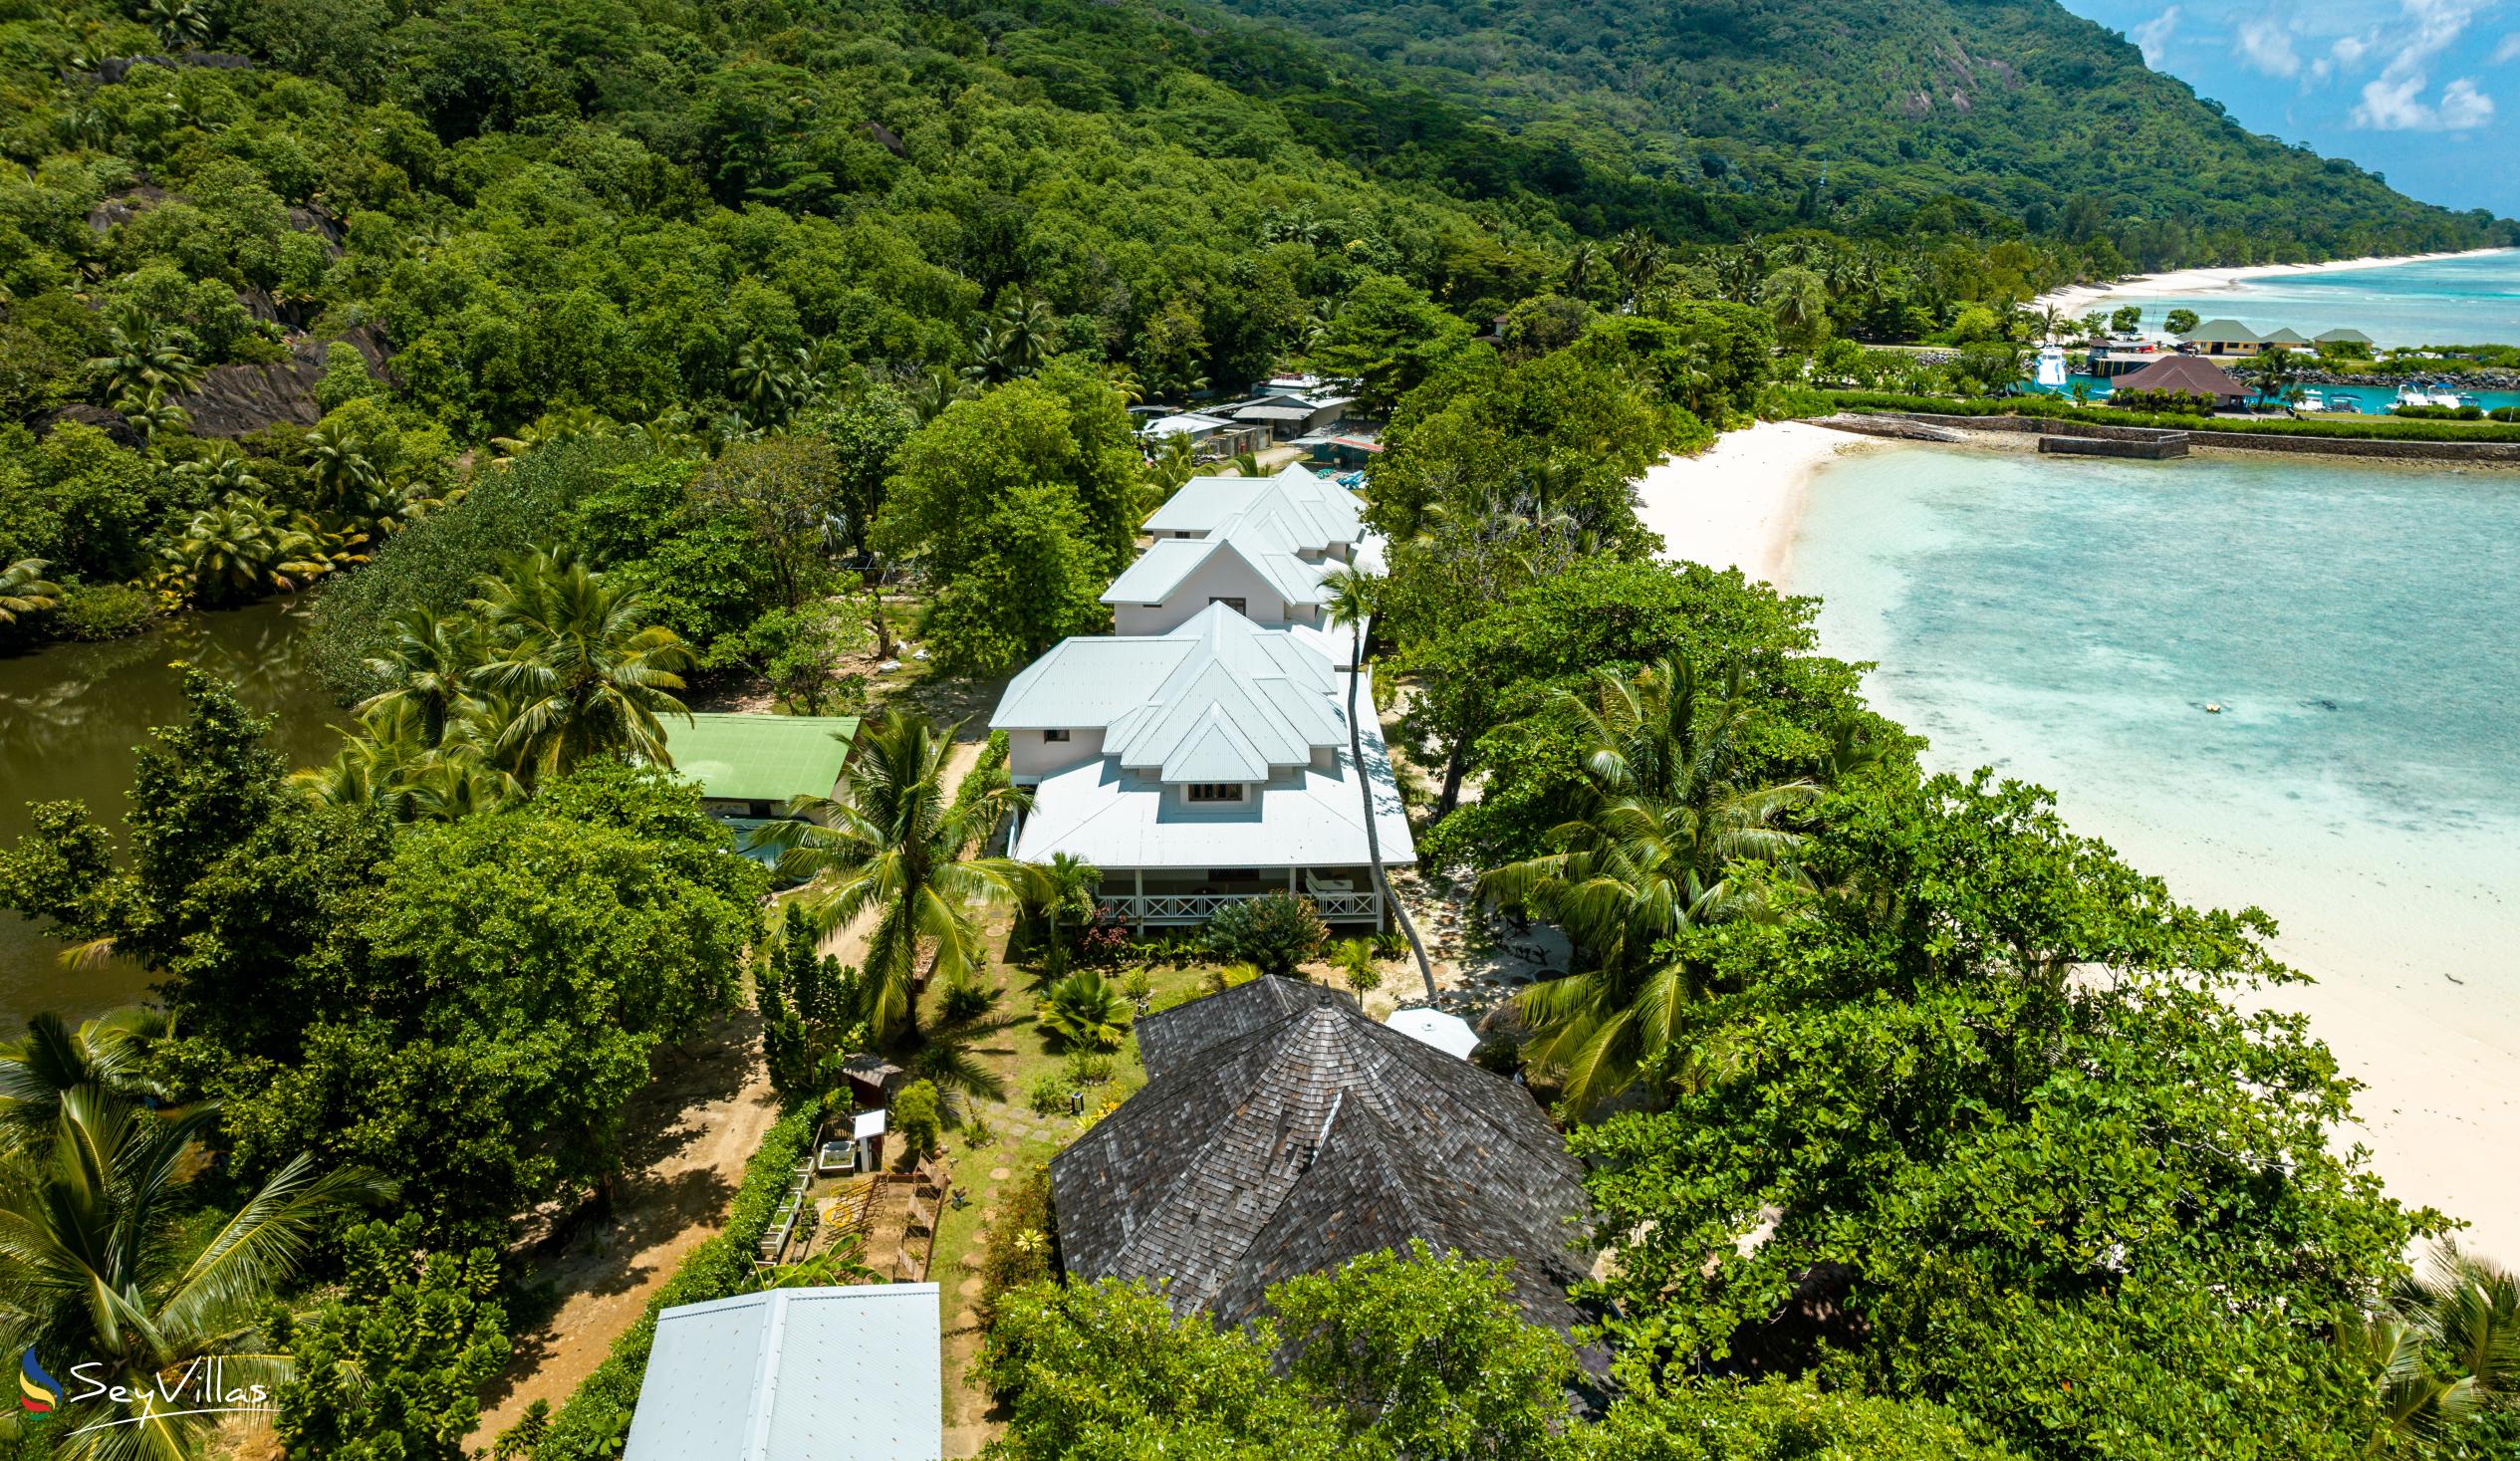 Photo 1: La Belle Tortue - Outdoor area - Silhouette Island (Seychelles)